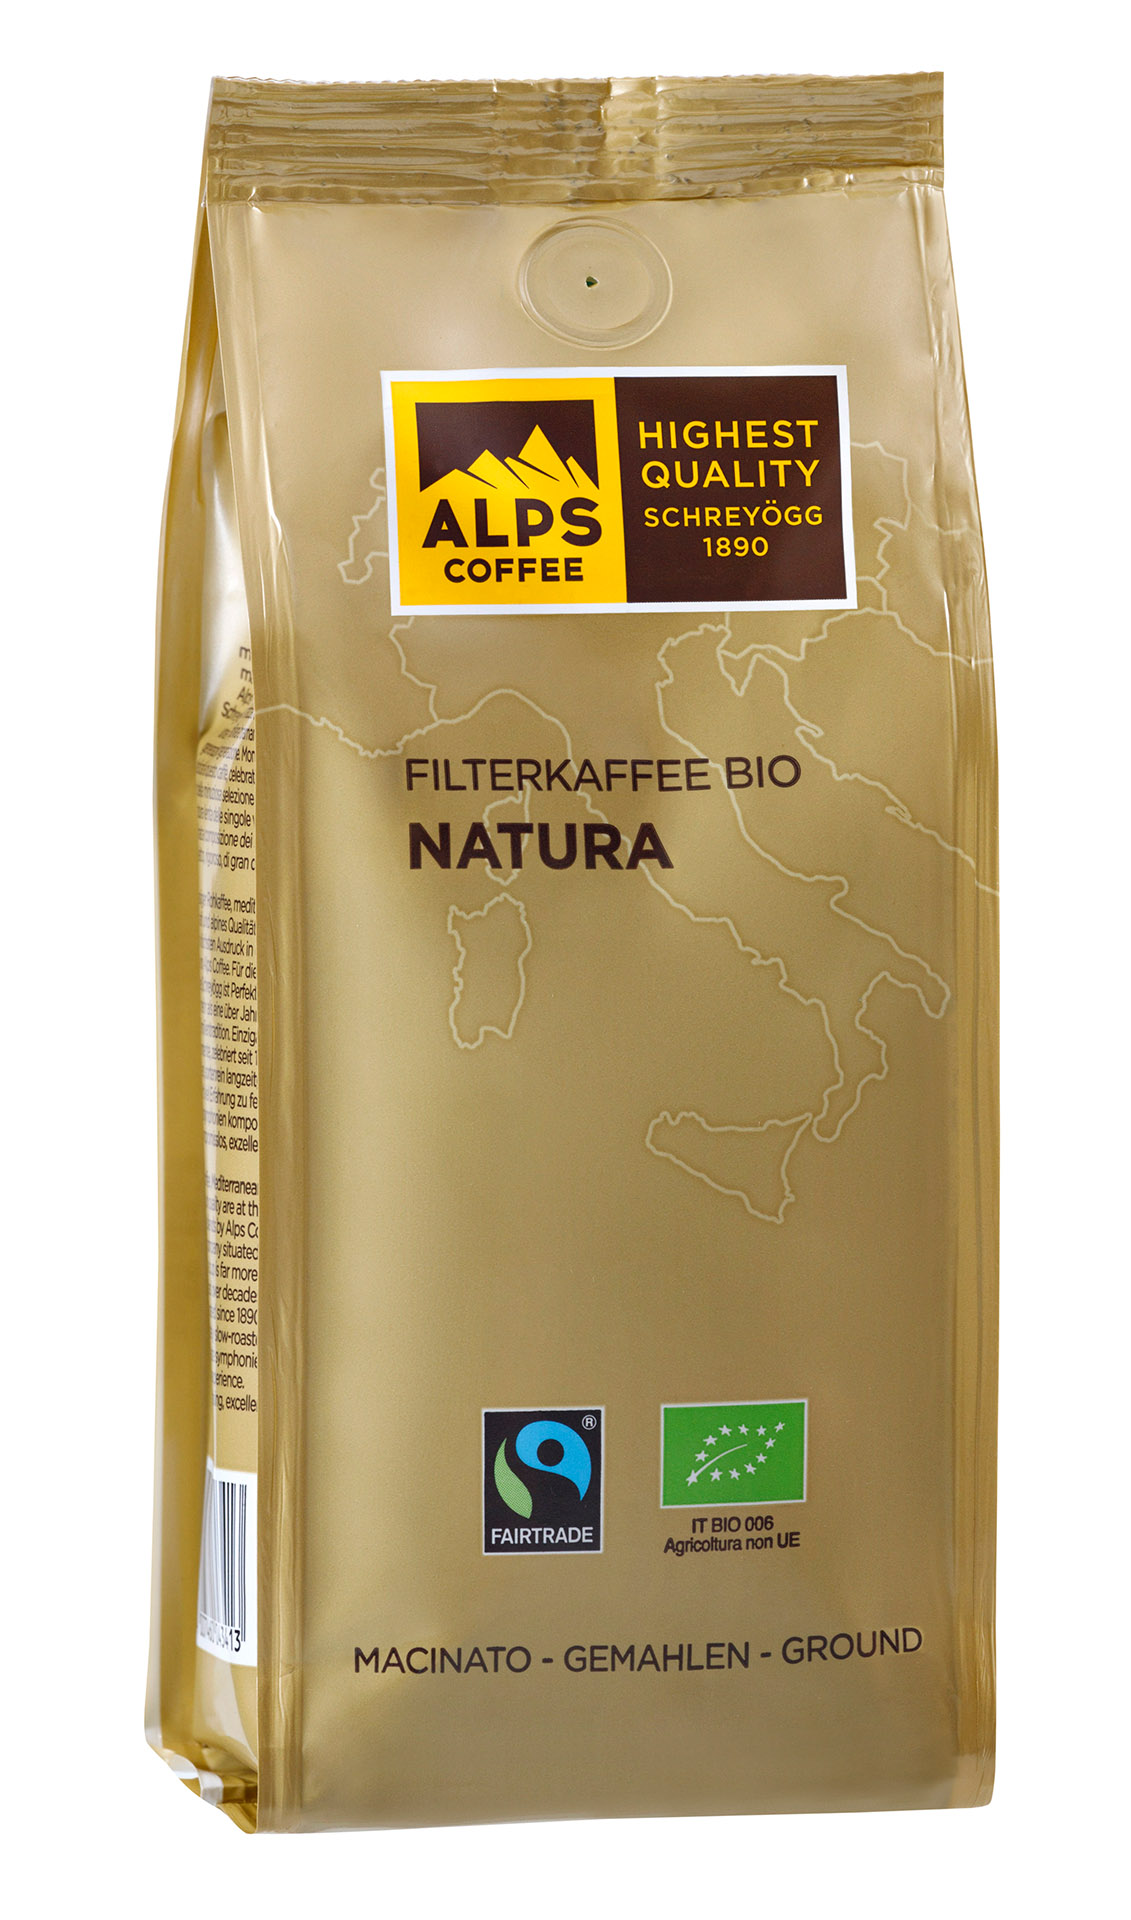 Filterkaffee Bio Natura (Flo) 250g